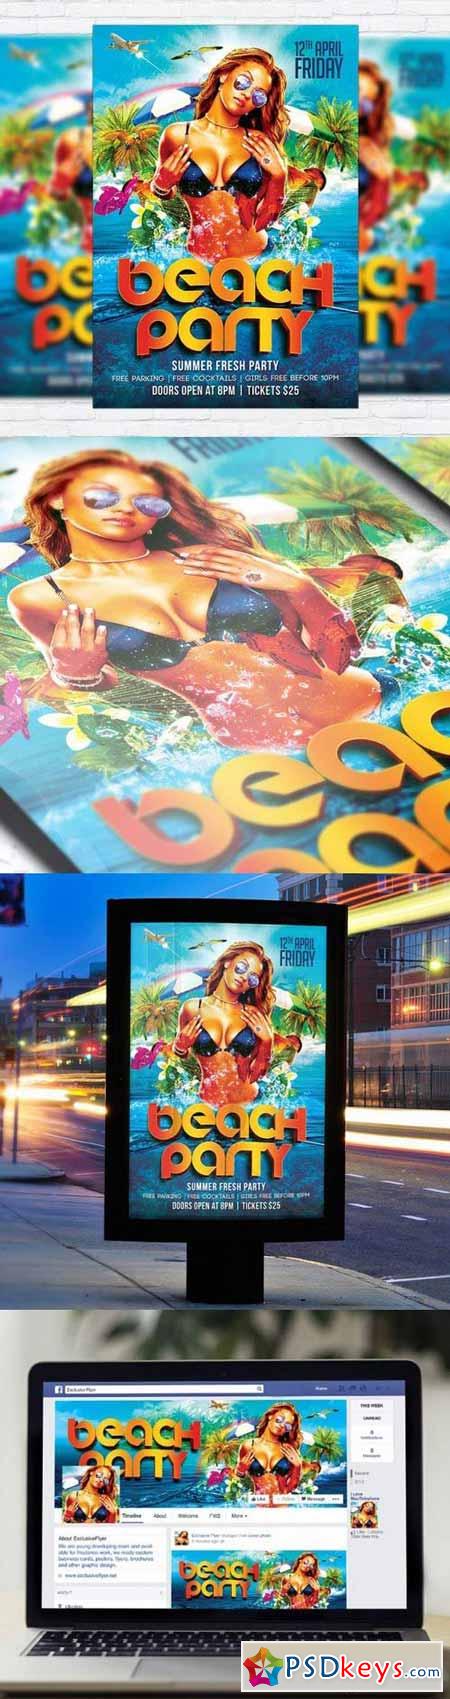 Beach Party Flyer PSD Template + Facebook Cover